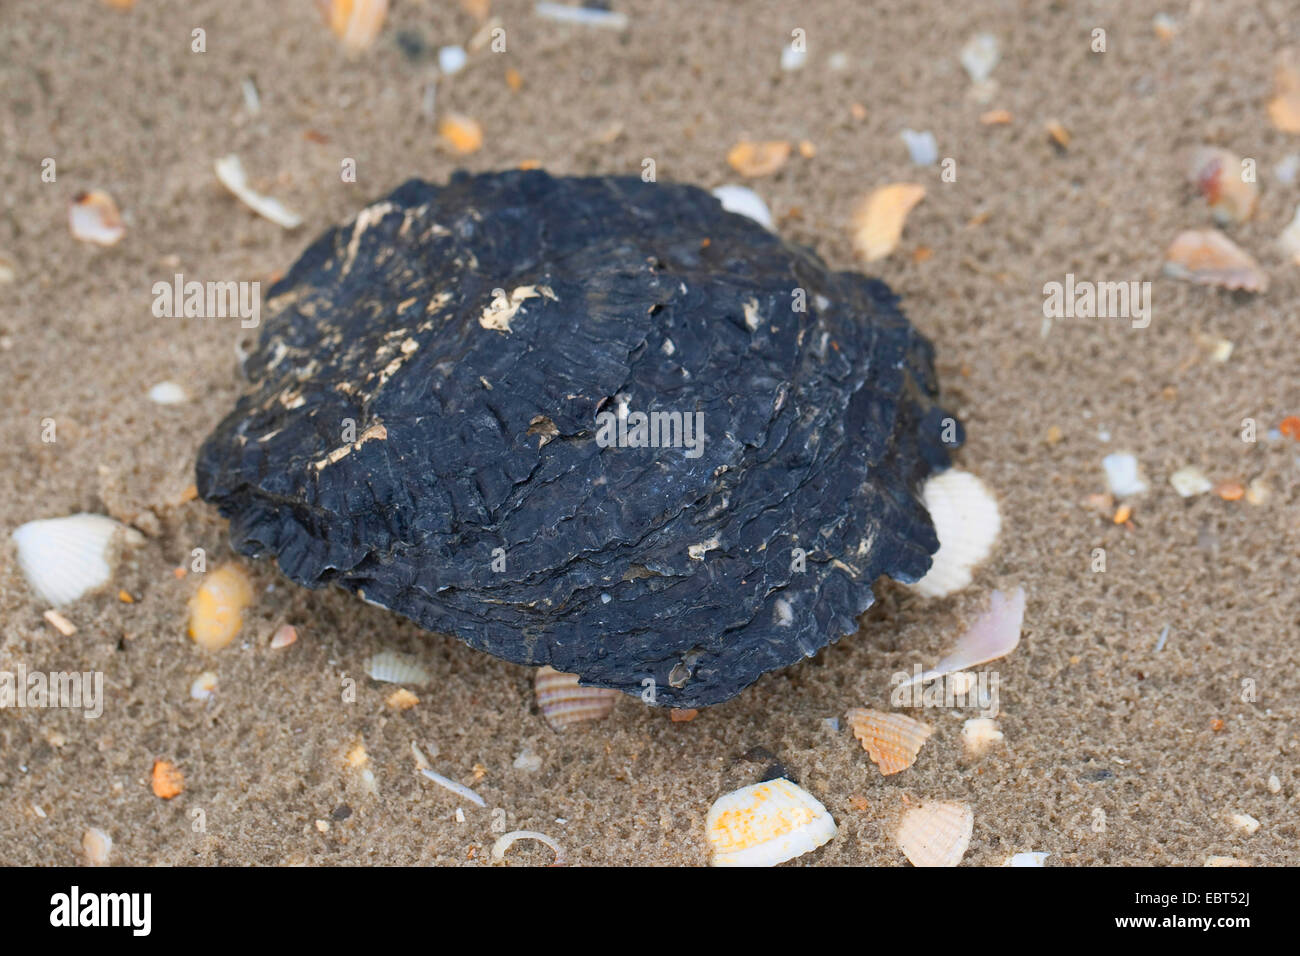 La Ostra plana europea, Colchester ostra nativa, barro, comestible ostra ostra (Ostrea edulis), conchas en la playa, Alemania Foto de stock